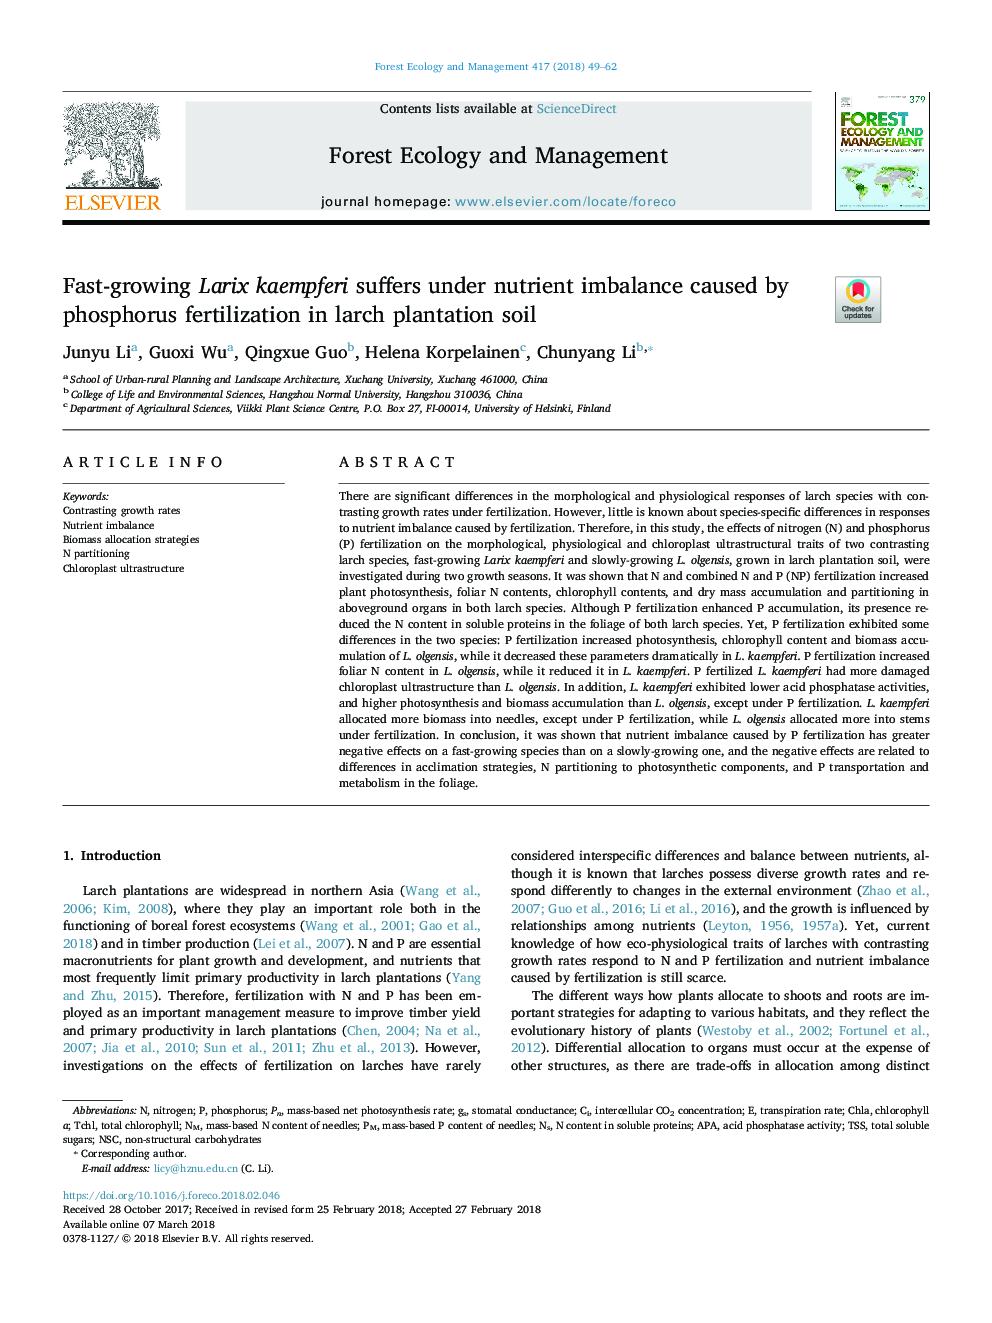 Fast-growing Larix kaempferi suffers under nutrient imbalance caused by phosphorus fertilization in larch plantation soil